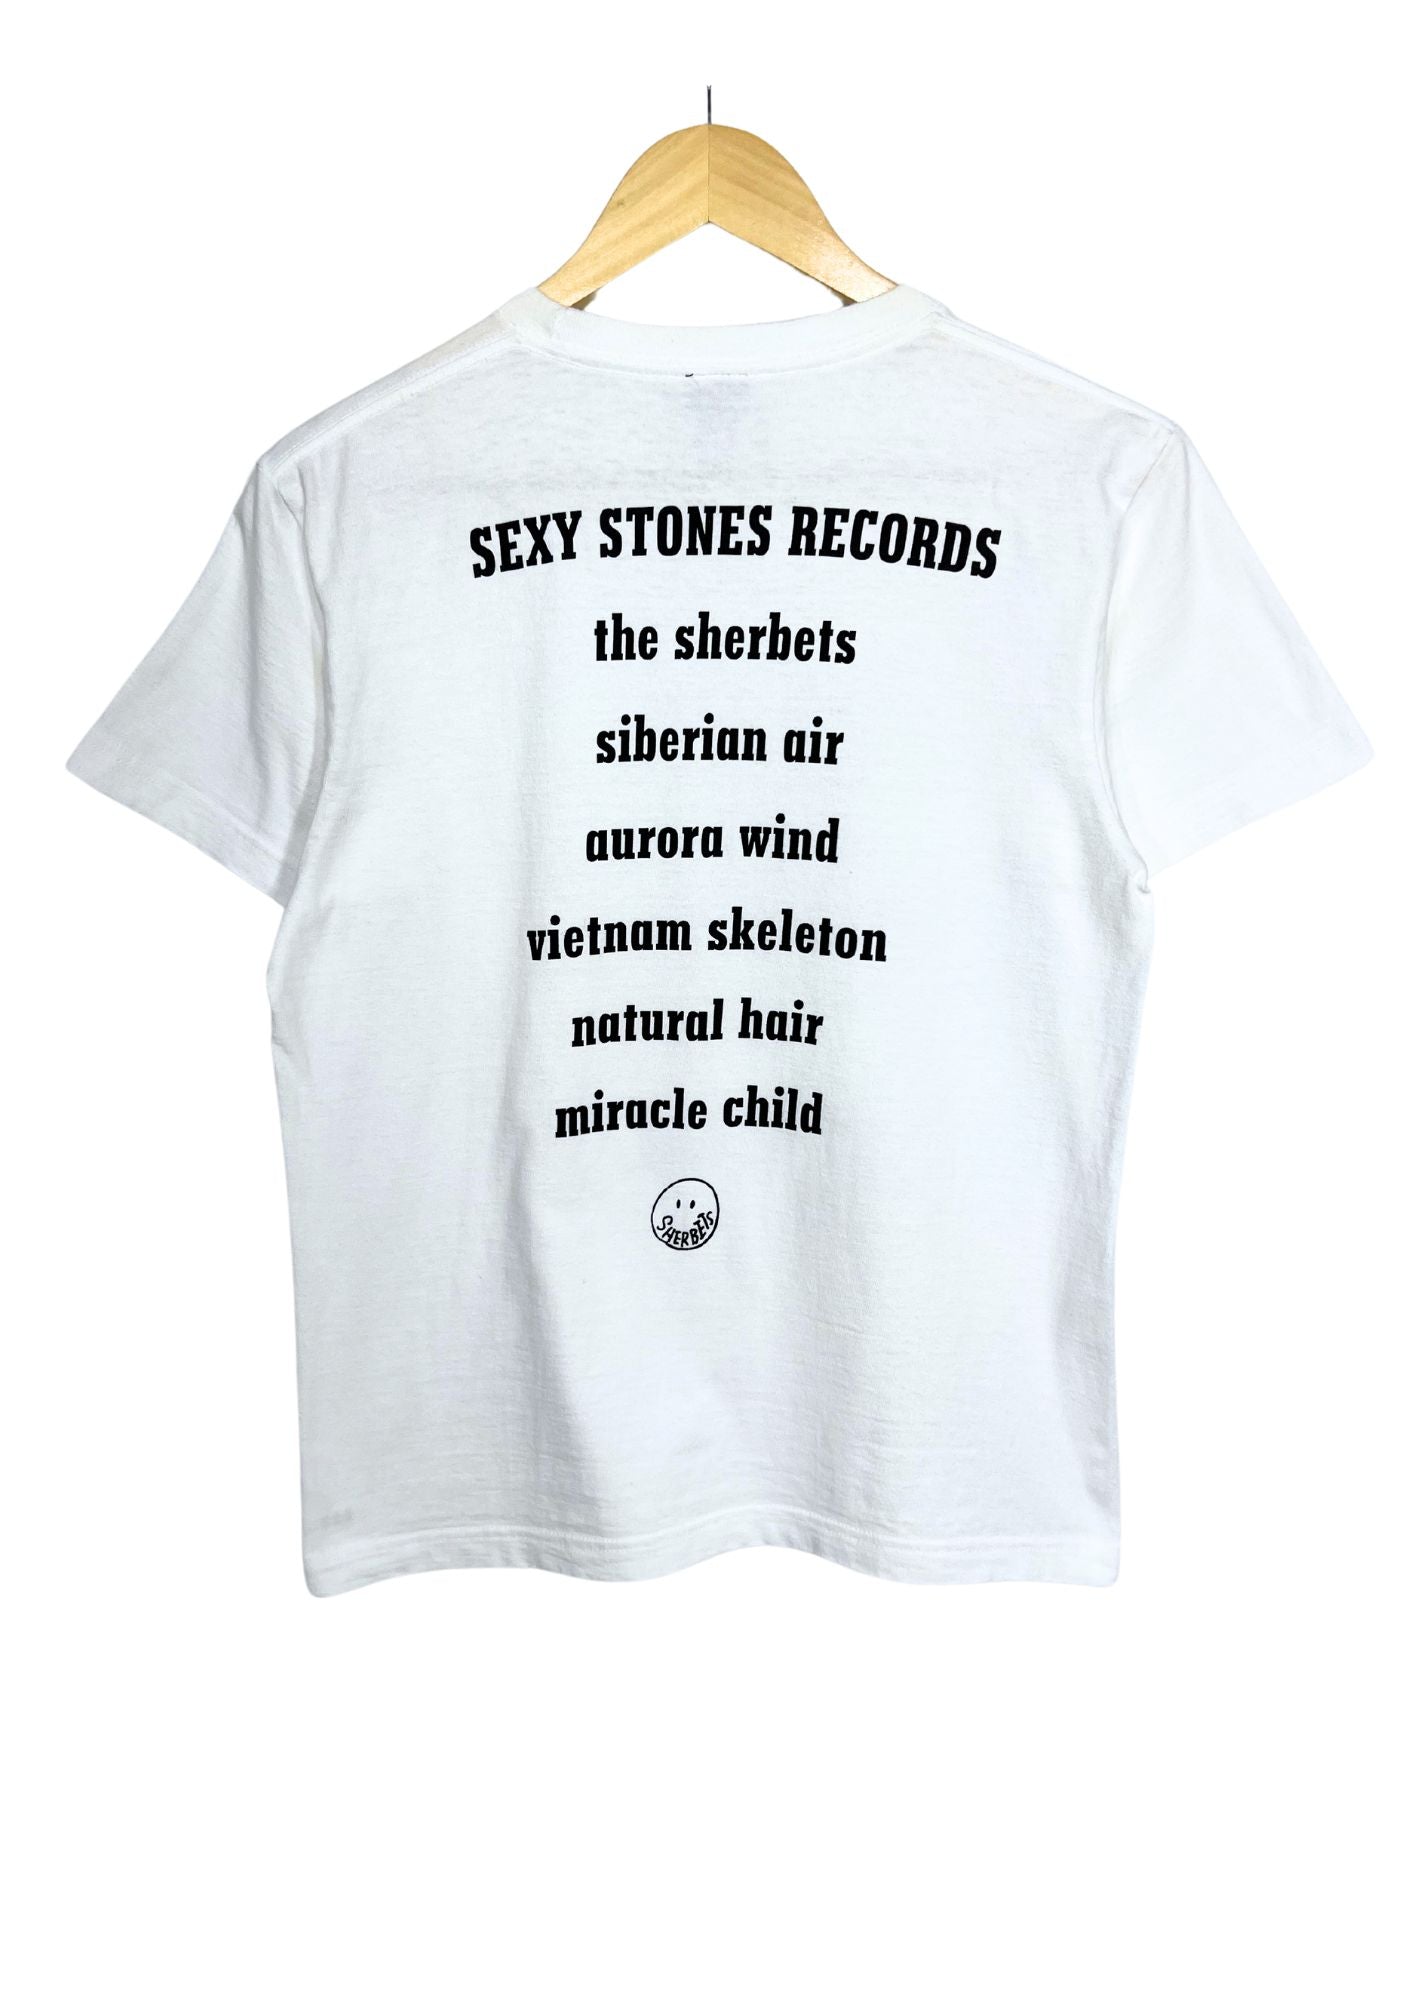 2000s SHERBETS Kenichi Asai ‘One day Sandy said’ Japanese Band T-shirt